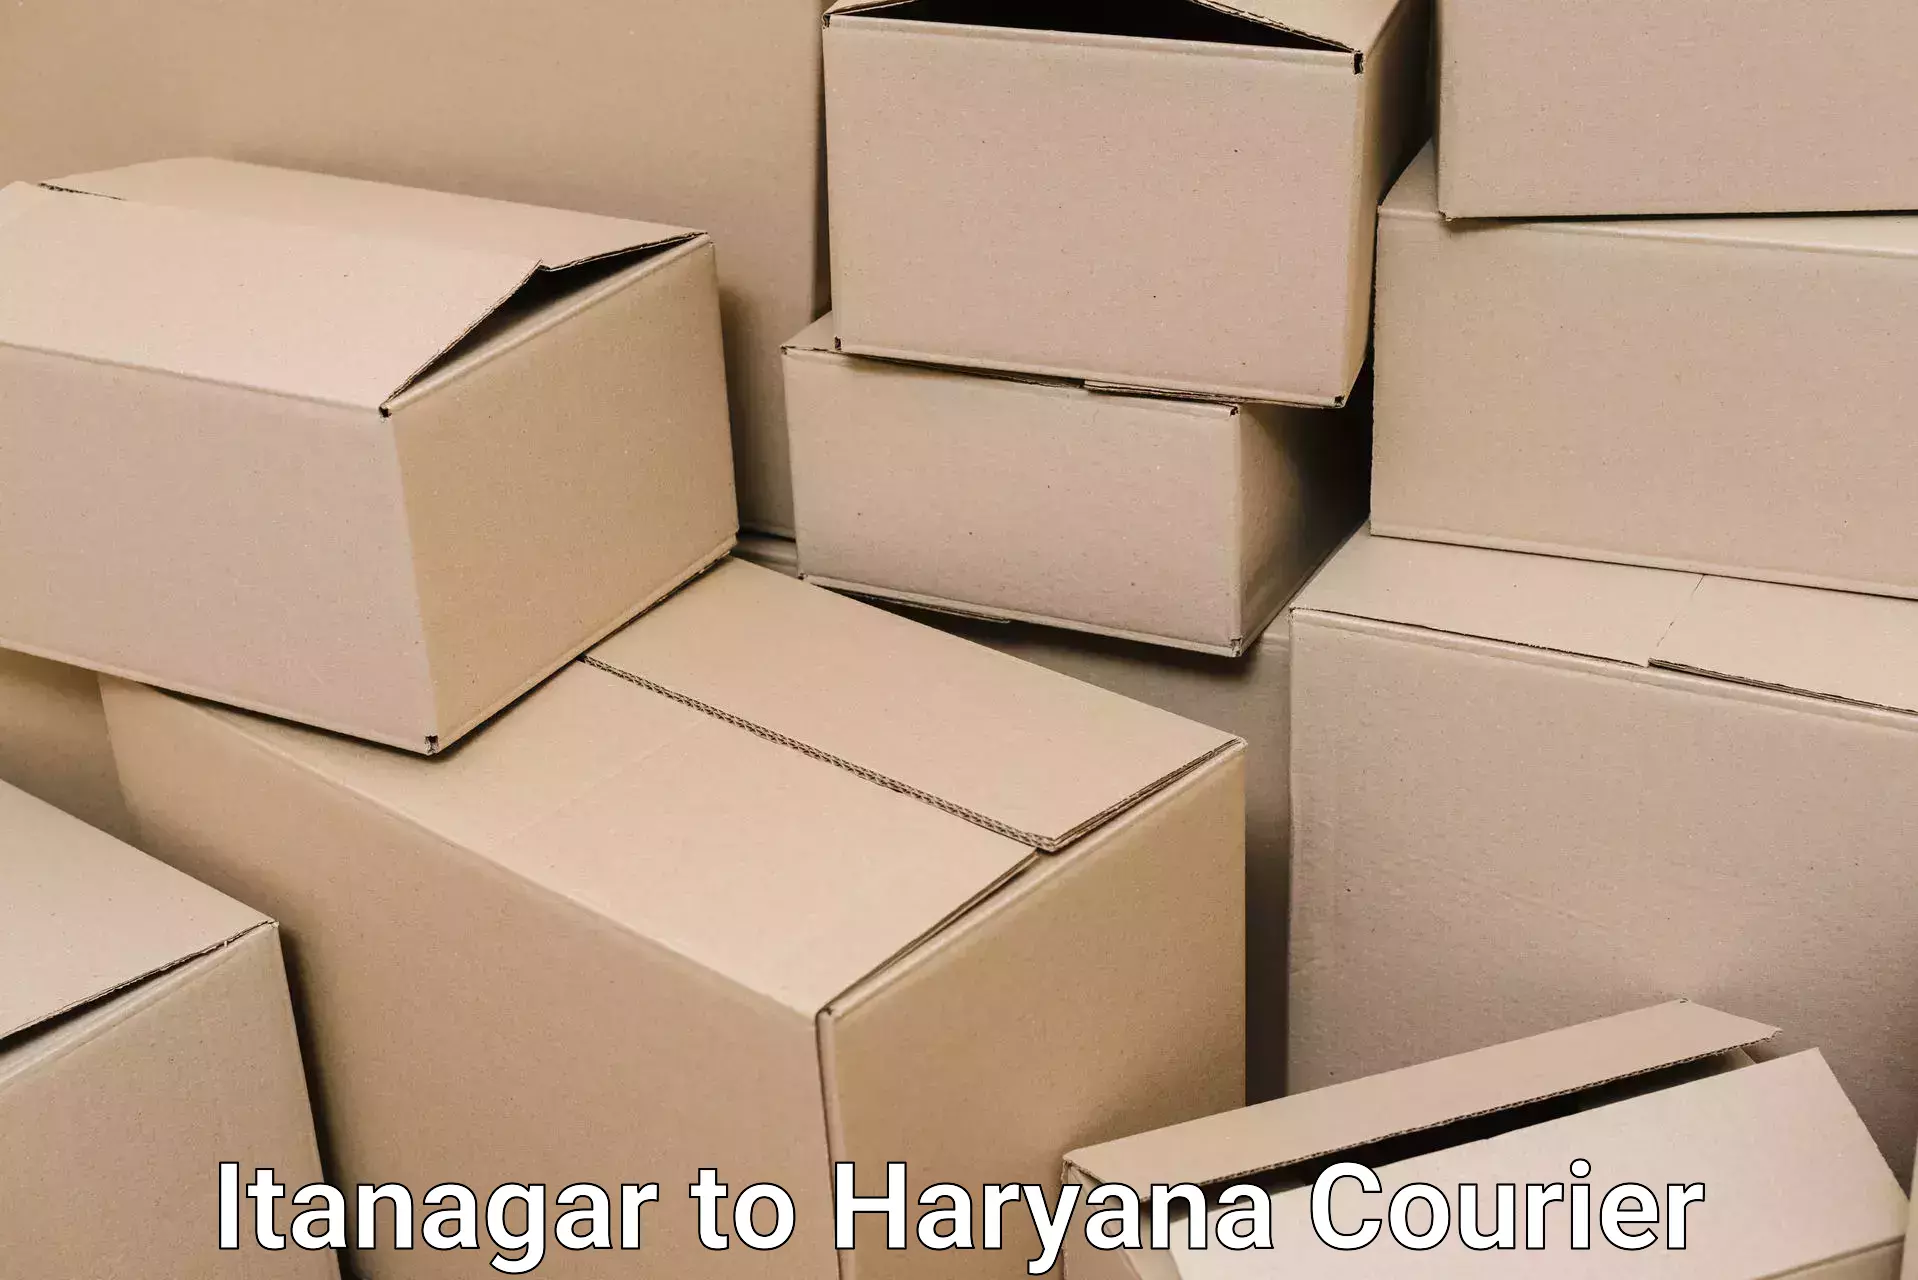 Efficient moving company Itanagar to Gurgaon